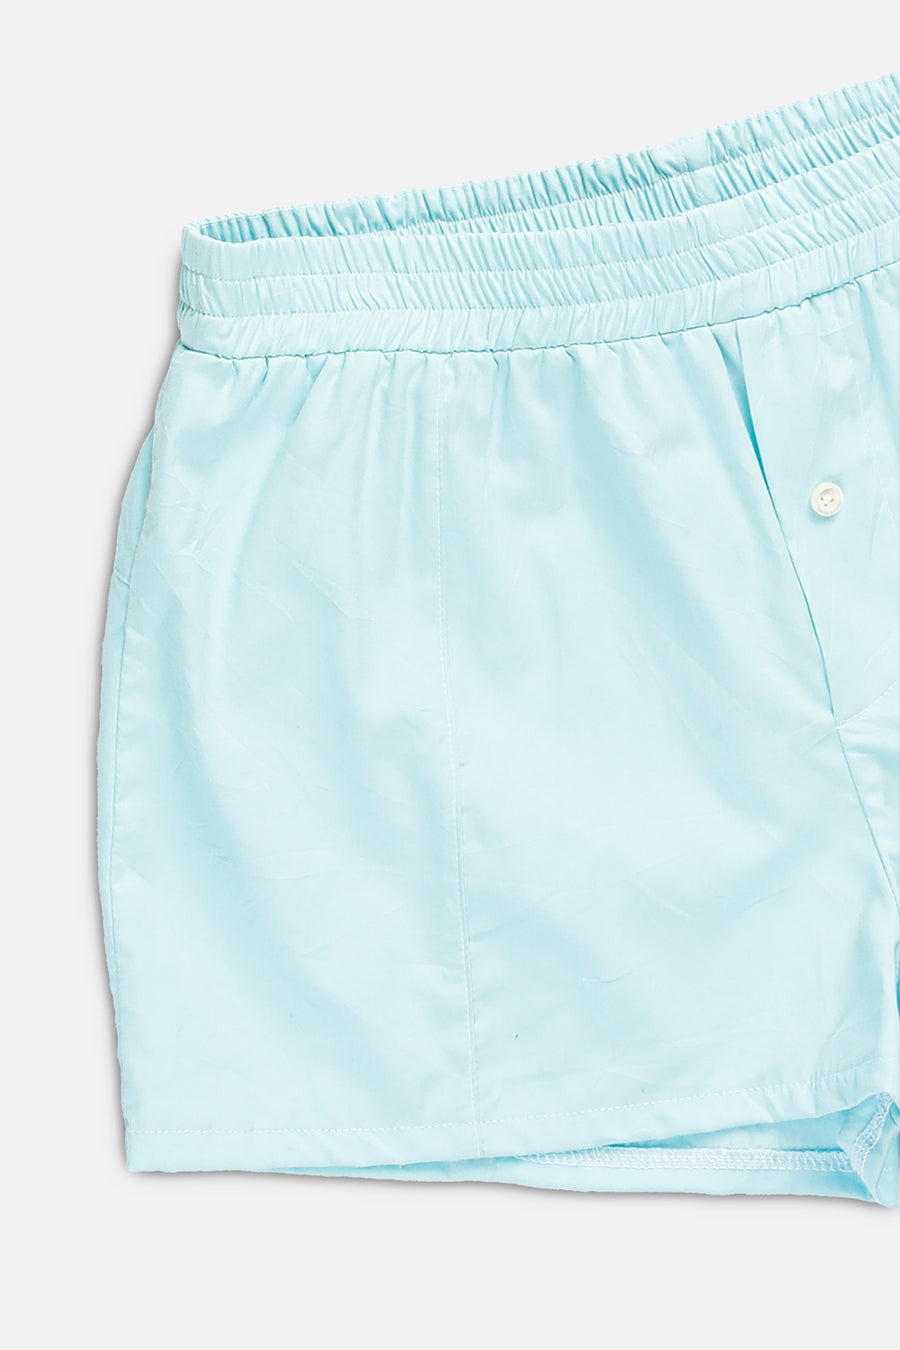 Rework Oxford Mini Boxer Shorts - XS, S, M, L, XL